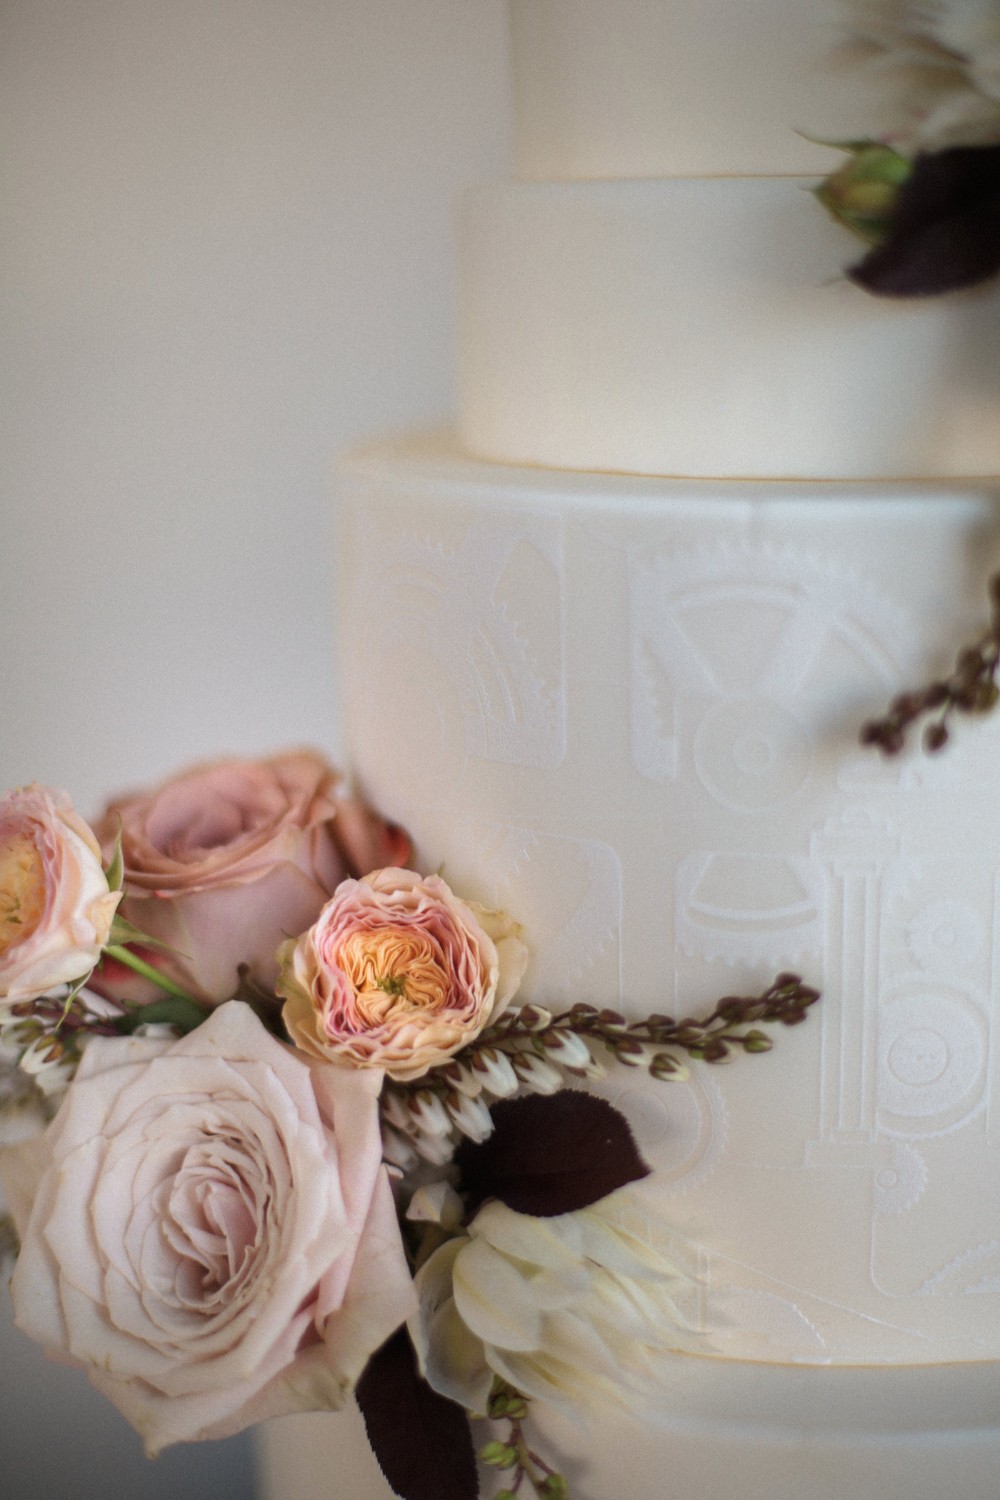 classic romantic wedding cake